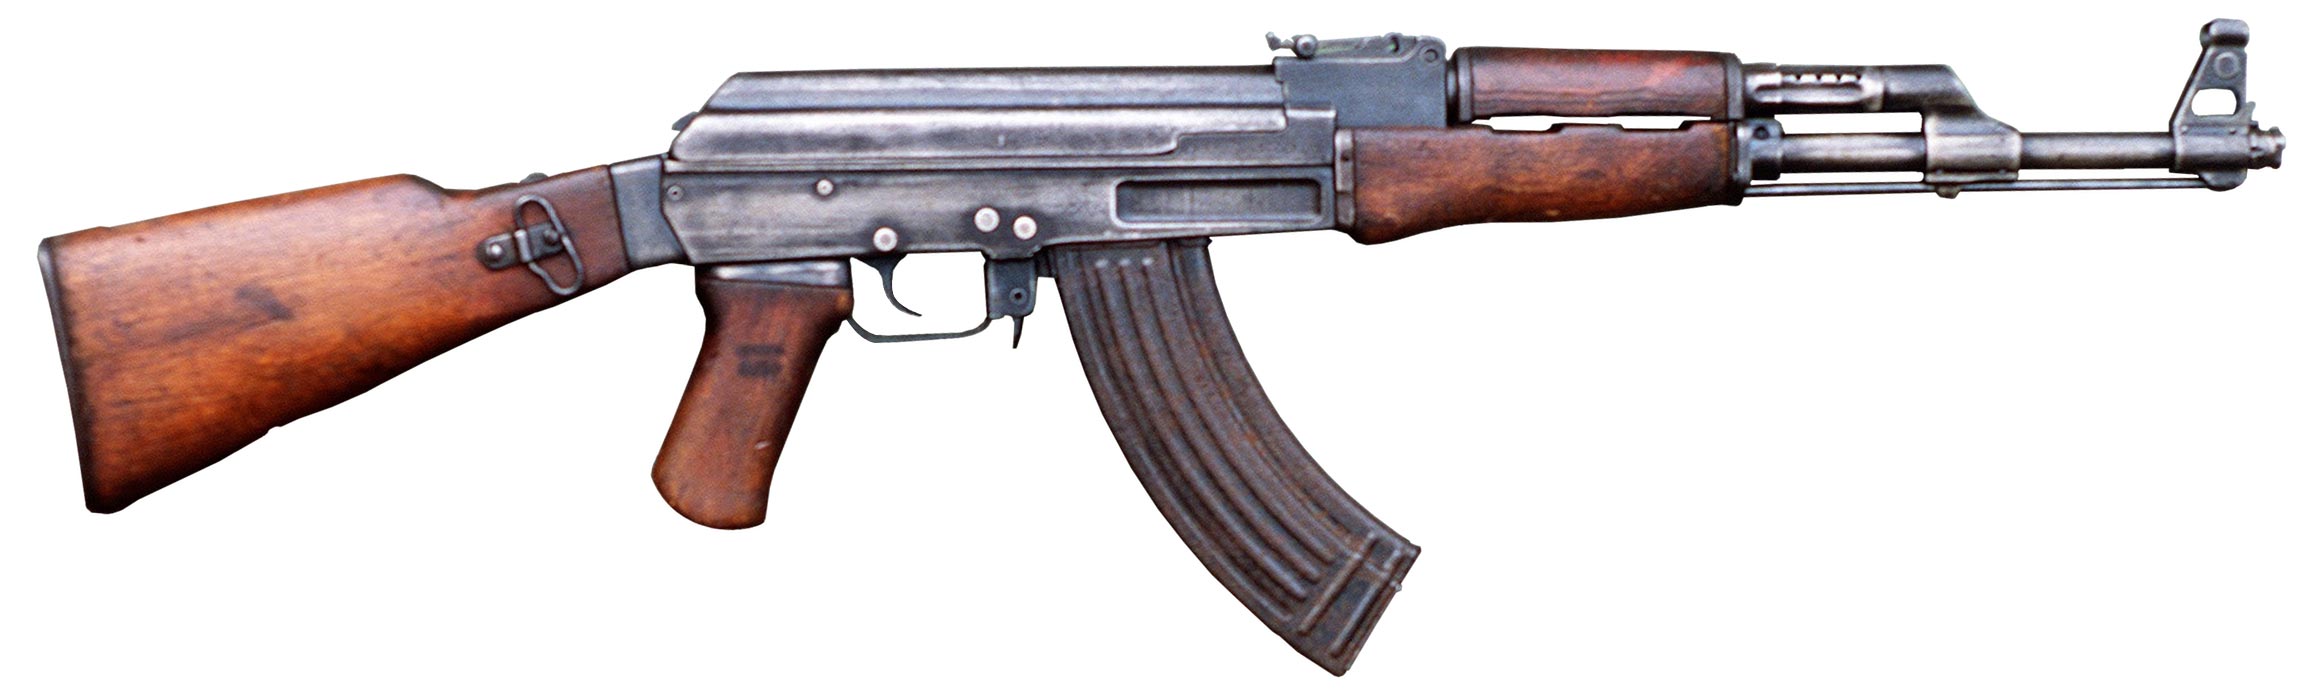 World's deadliest inventor: Mikhail Kalashnikov and his AK-47